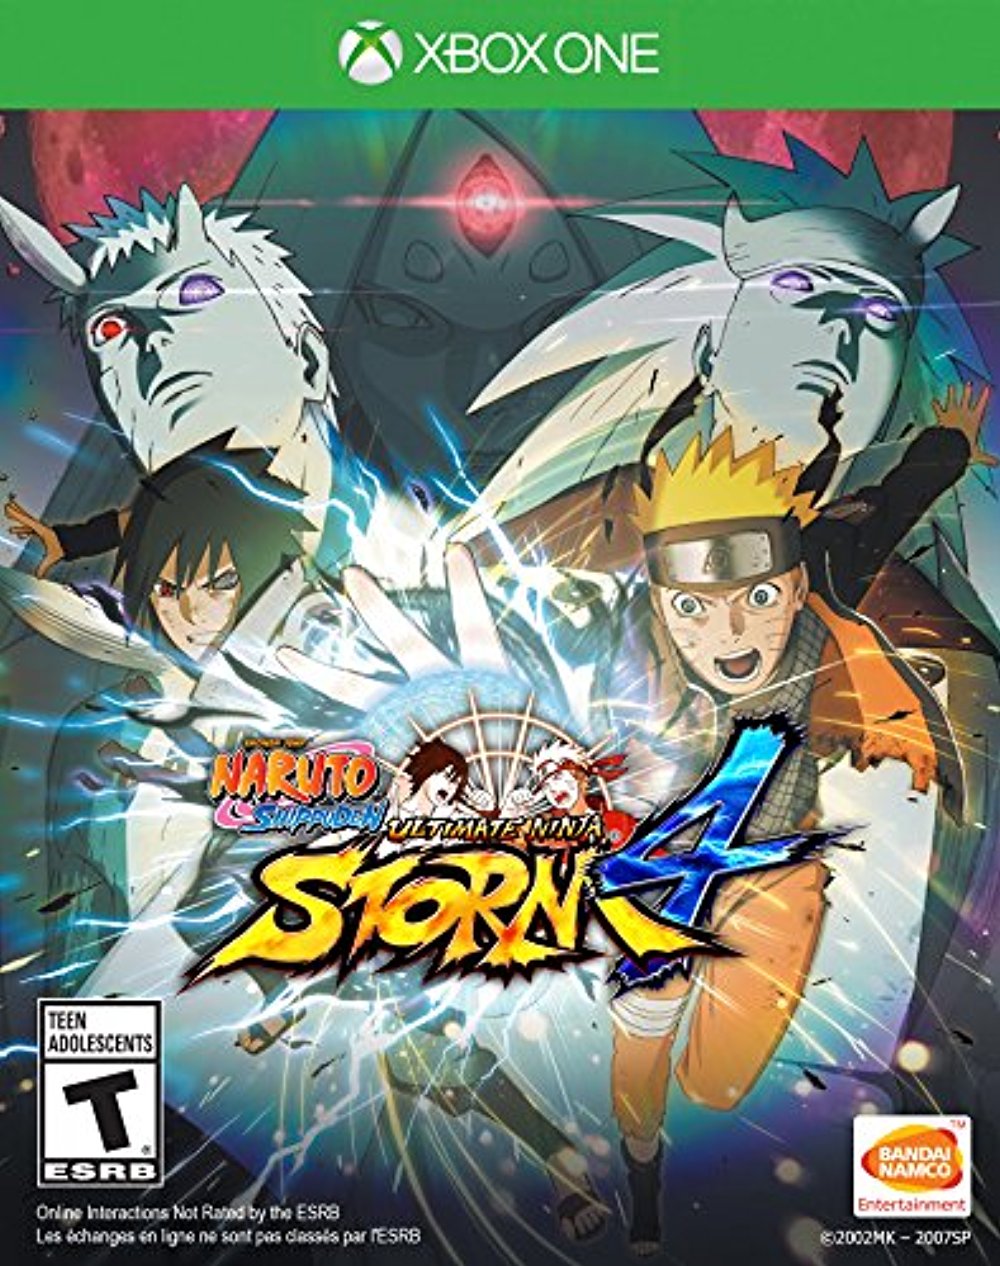 Naruto Shippuden Ultimate Ninja Storm 4 Road to Boruto